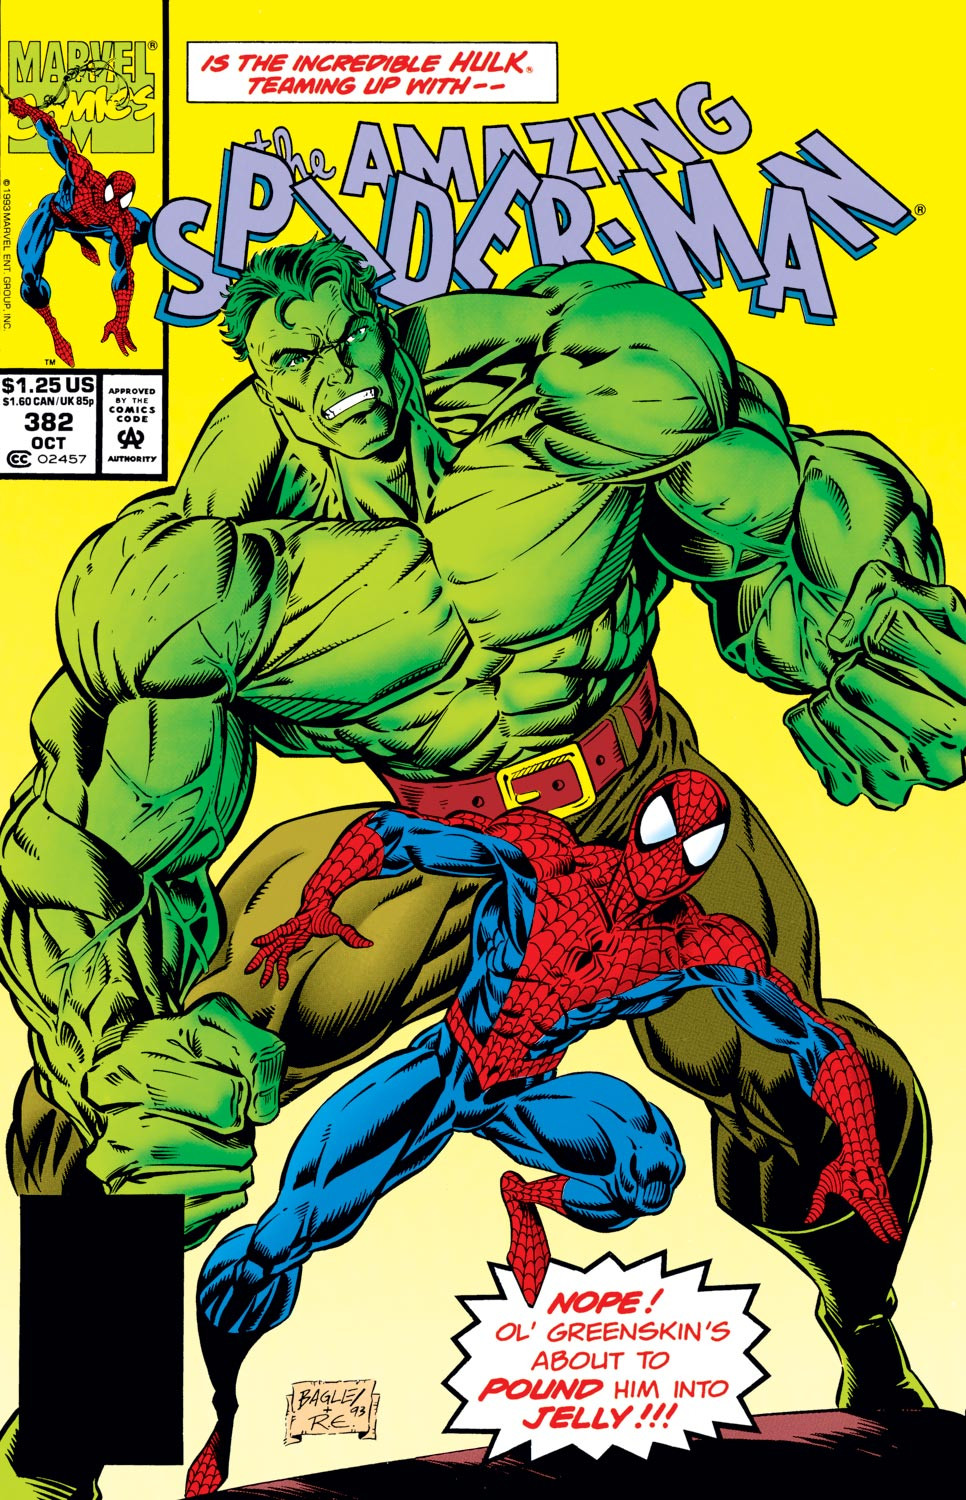 Spider-Man # 39 - October 1993 - Marvel Comics